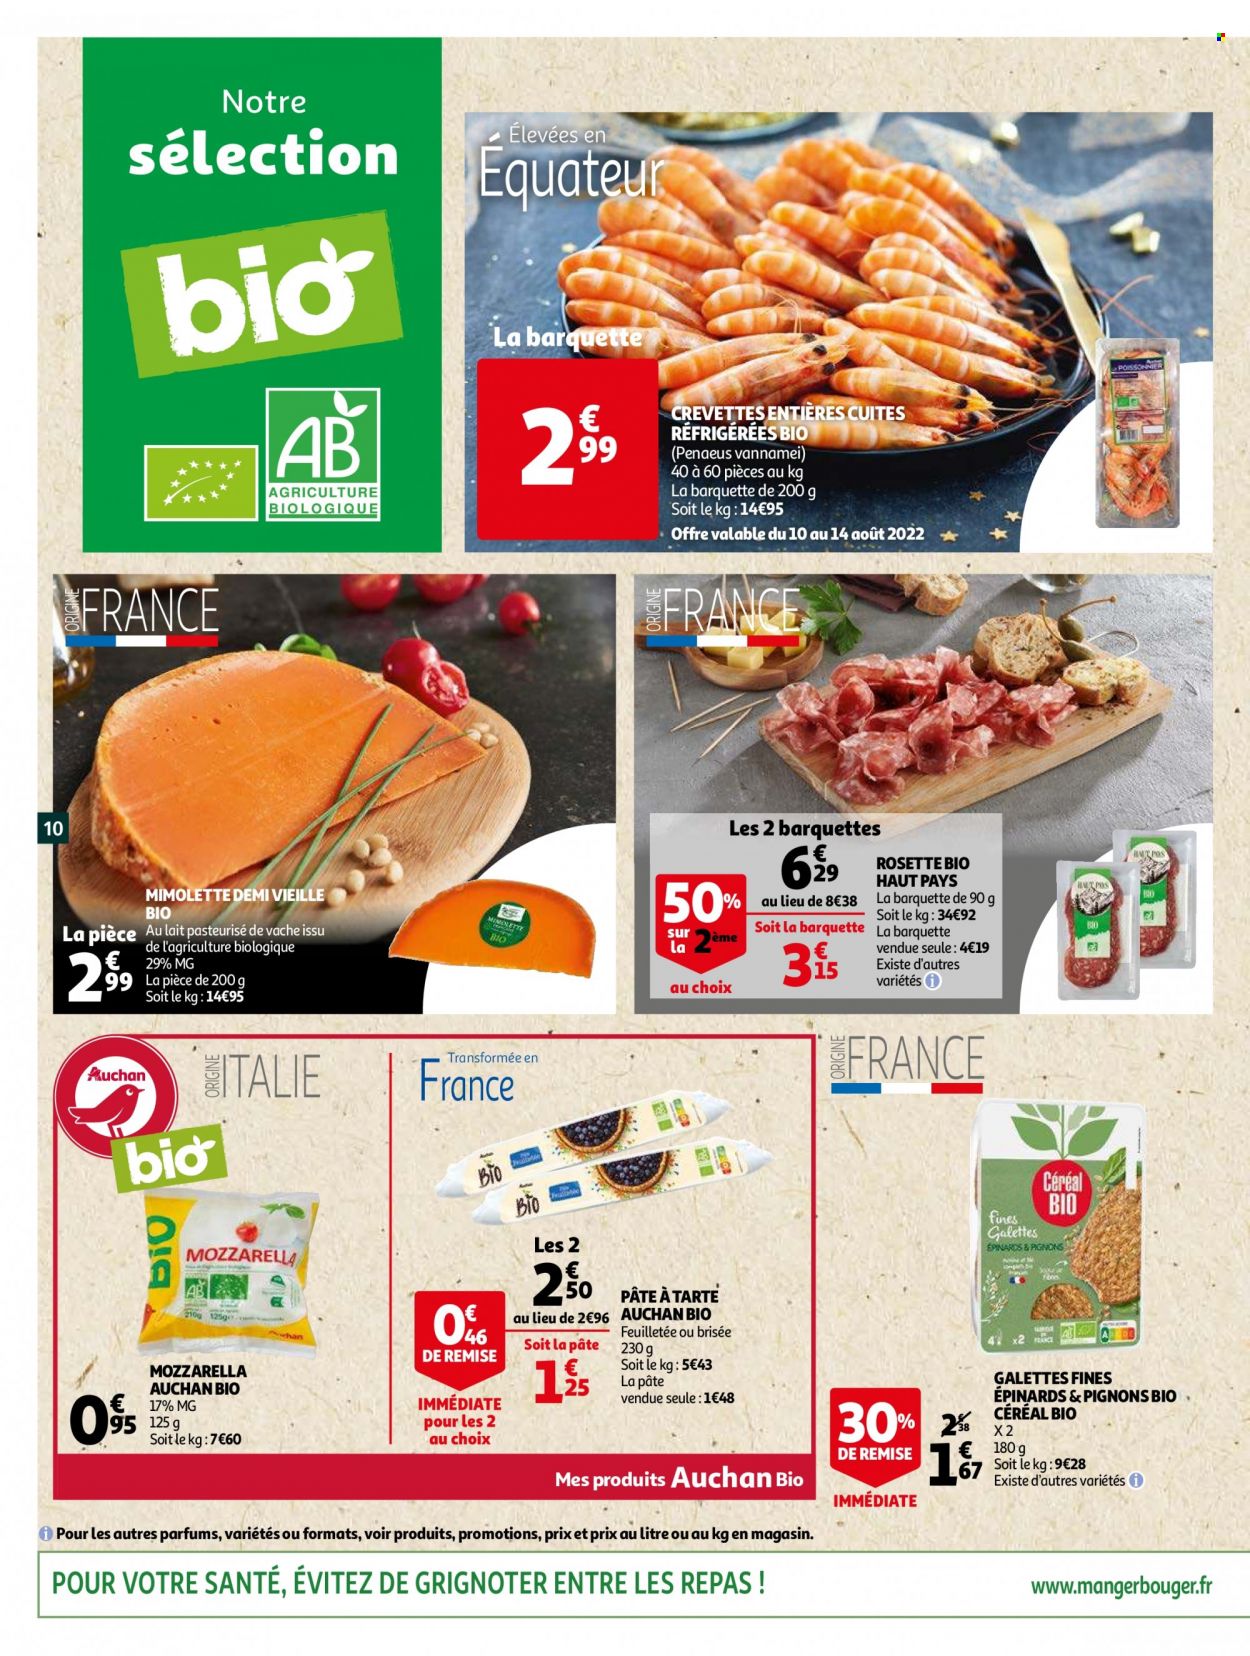 Catalogue Auchan - 10.08.2022 - 16.08.2022. 